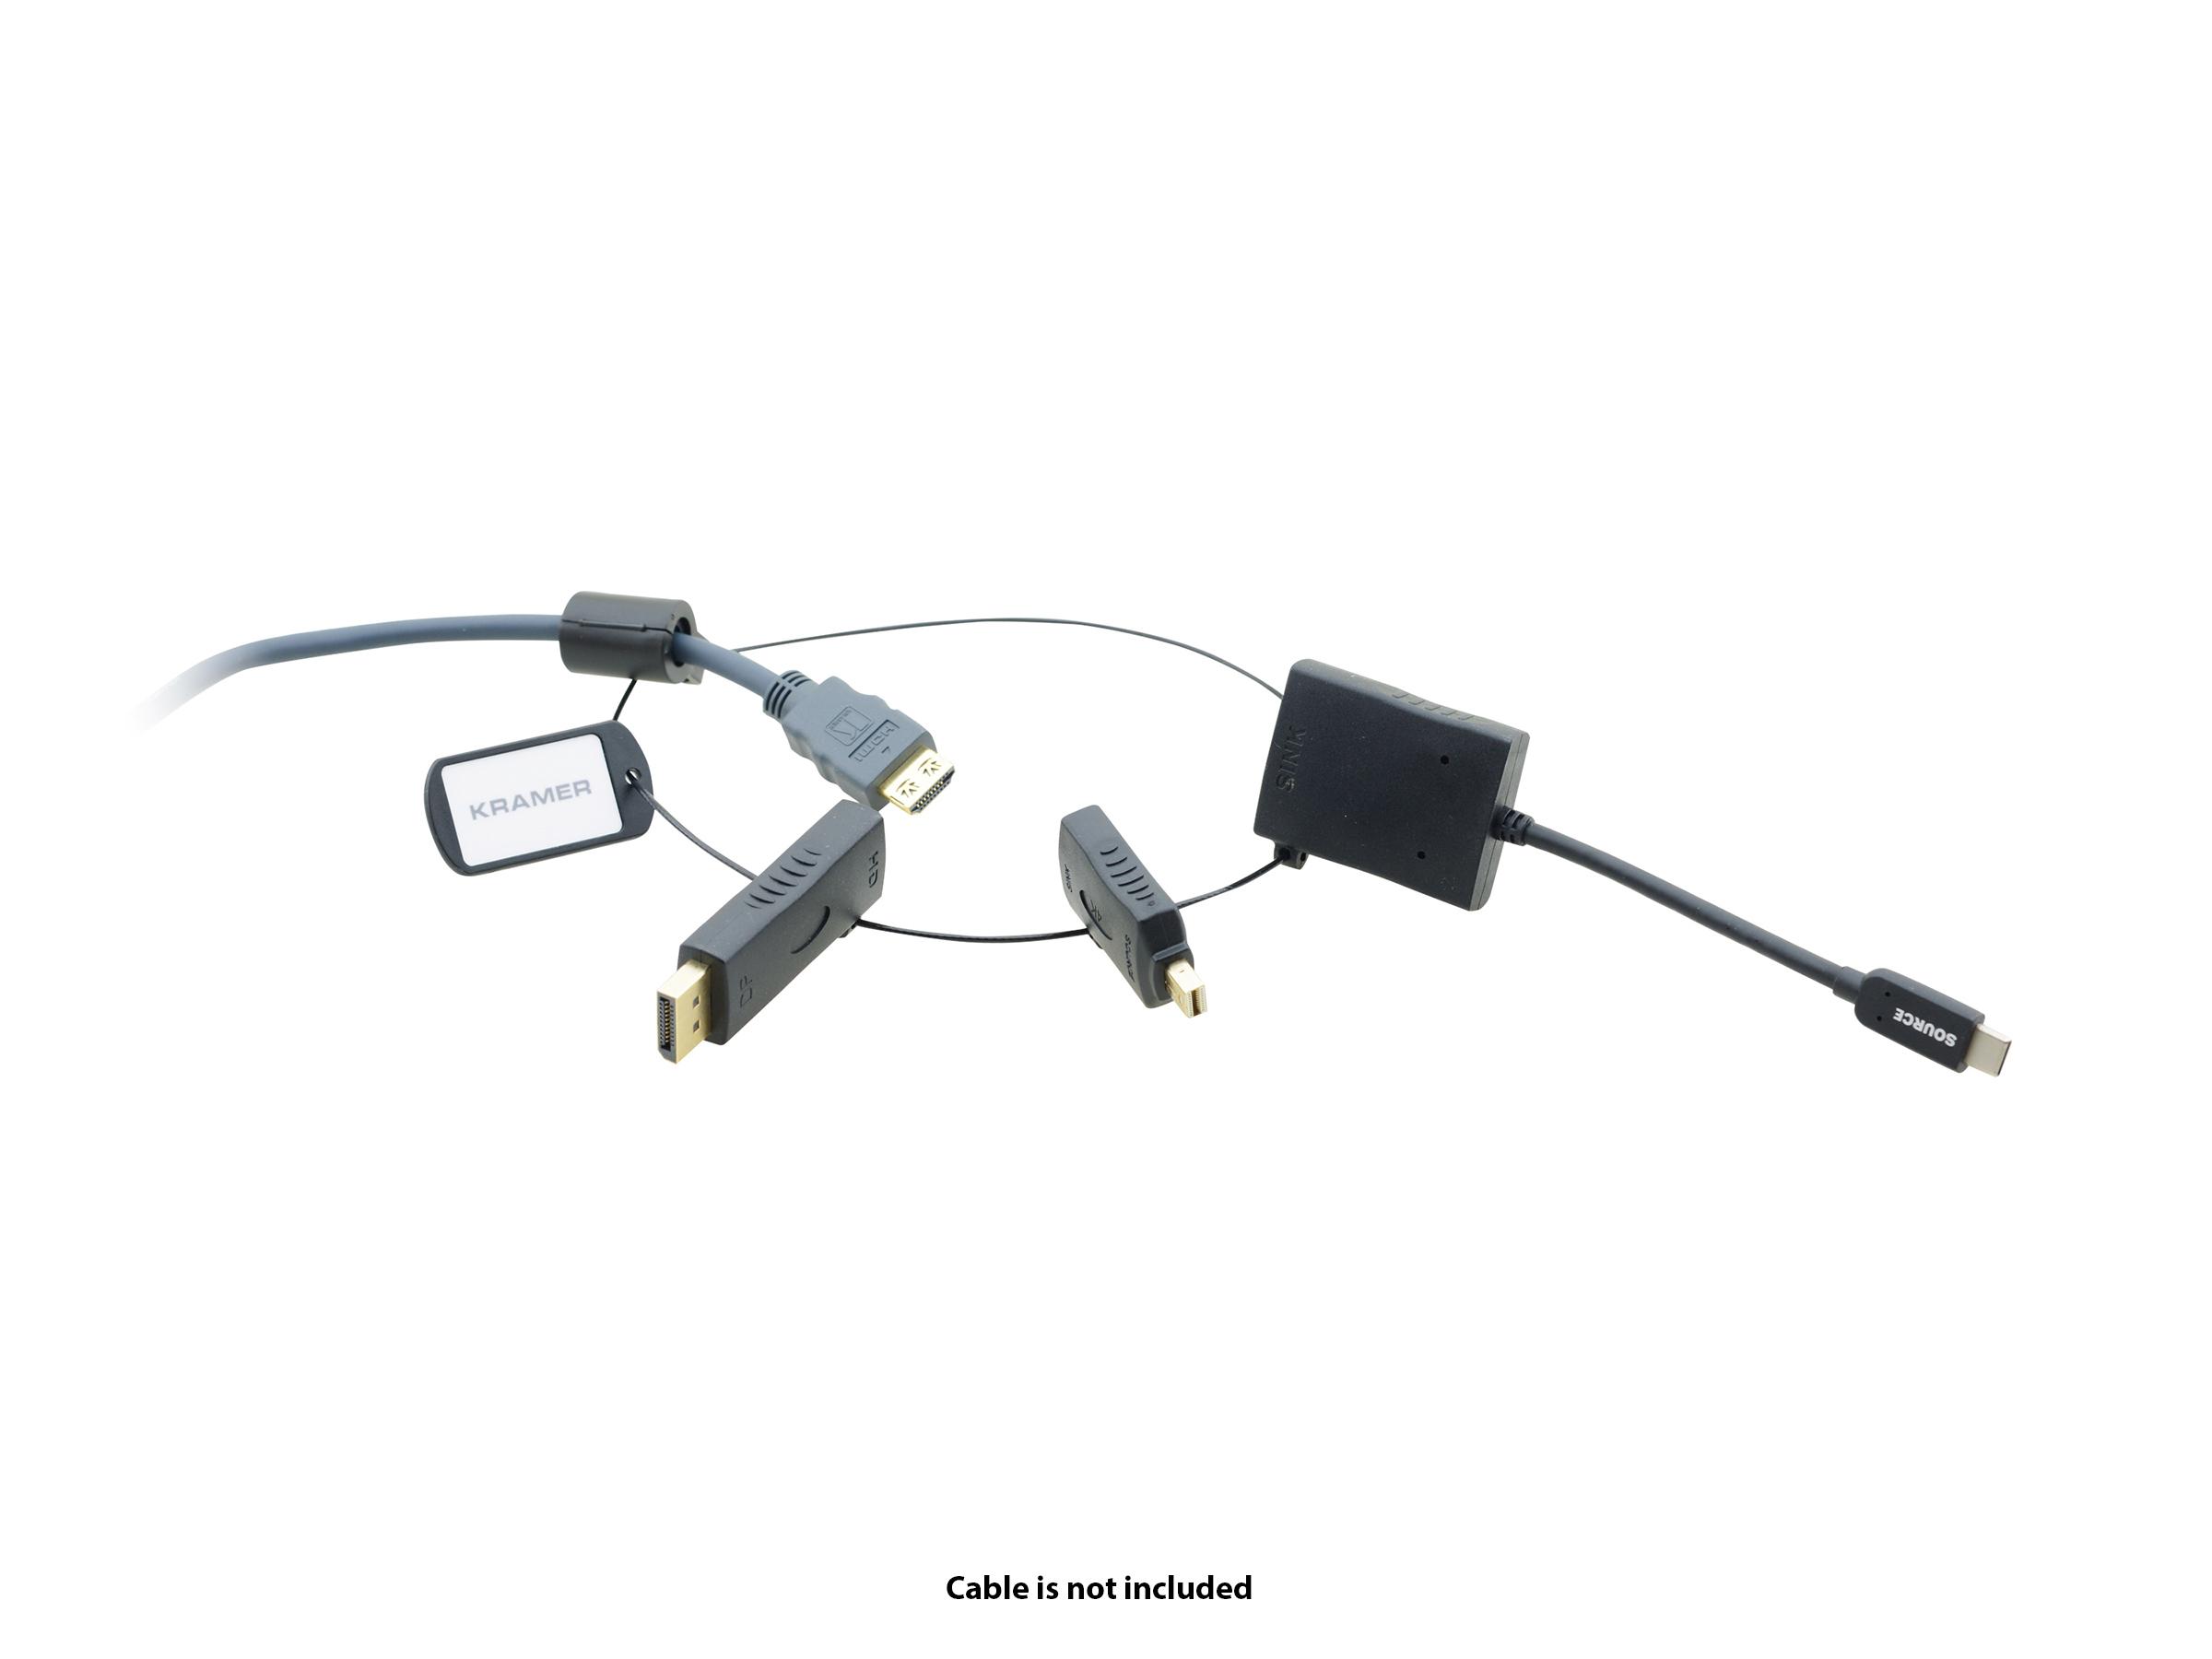 AD-RING-7 USB type-C/Mini DisplayPort/DisplayPort to HDMI (F) Adapter Ring by Kramer